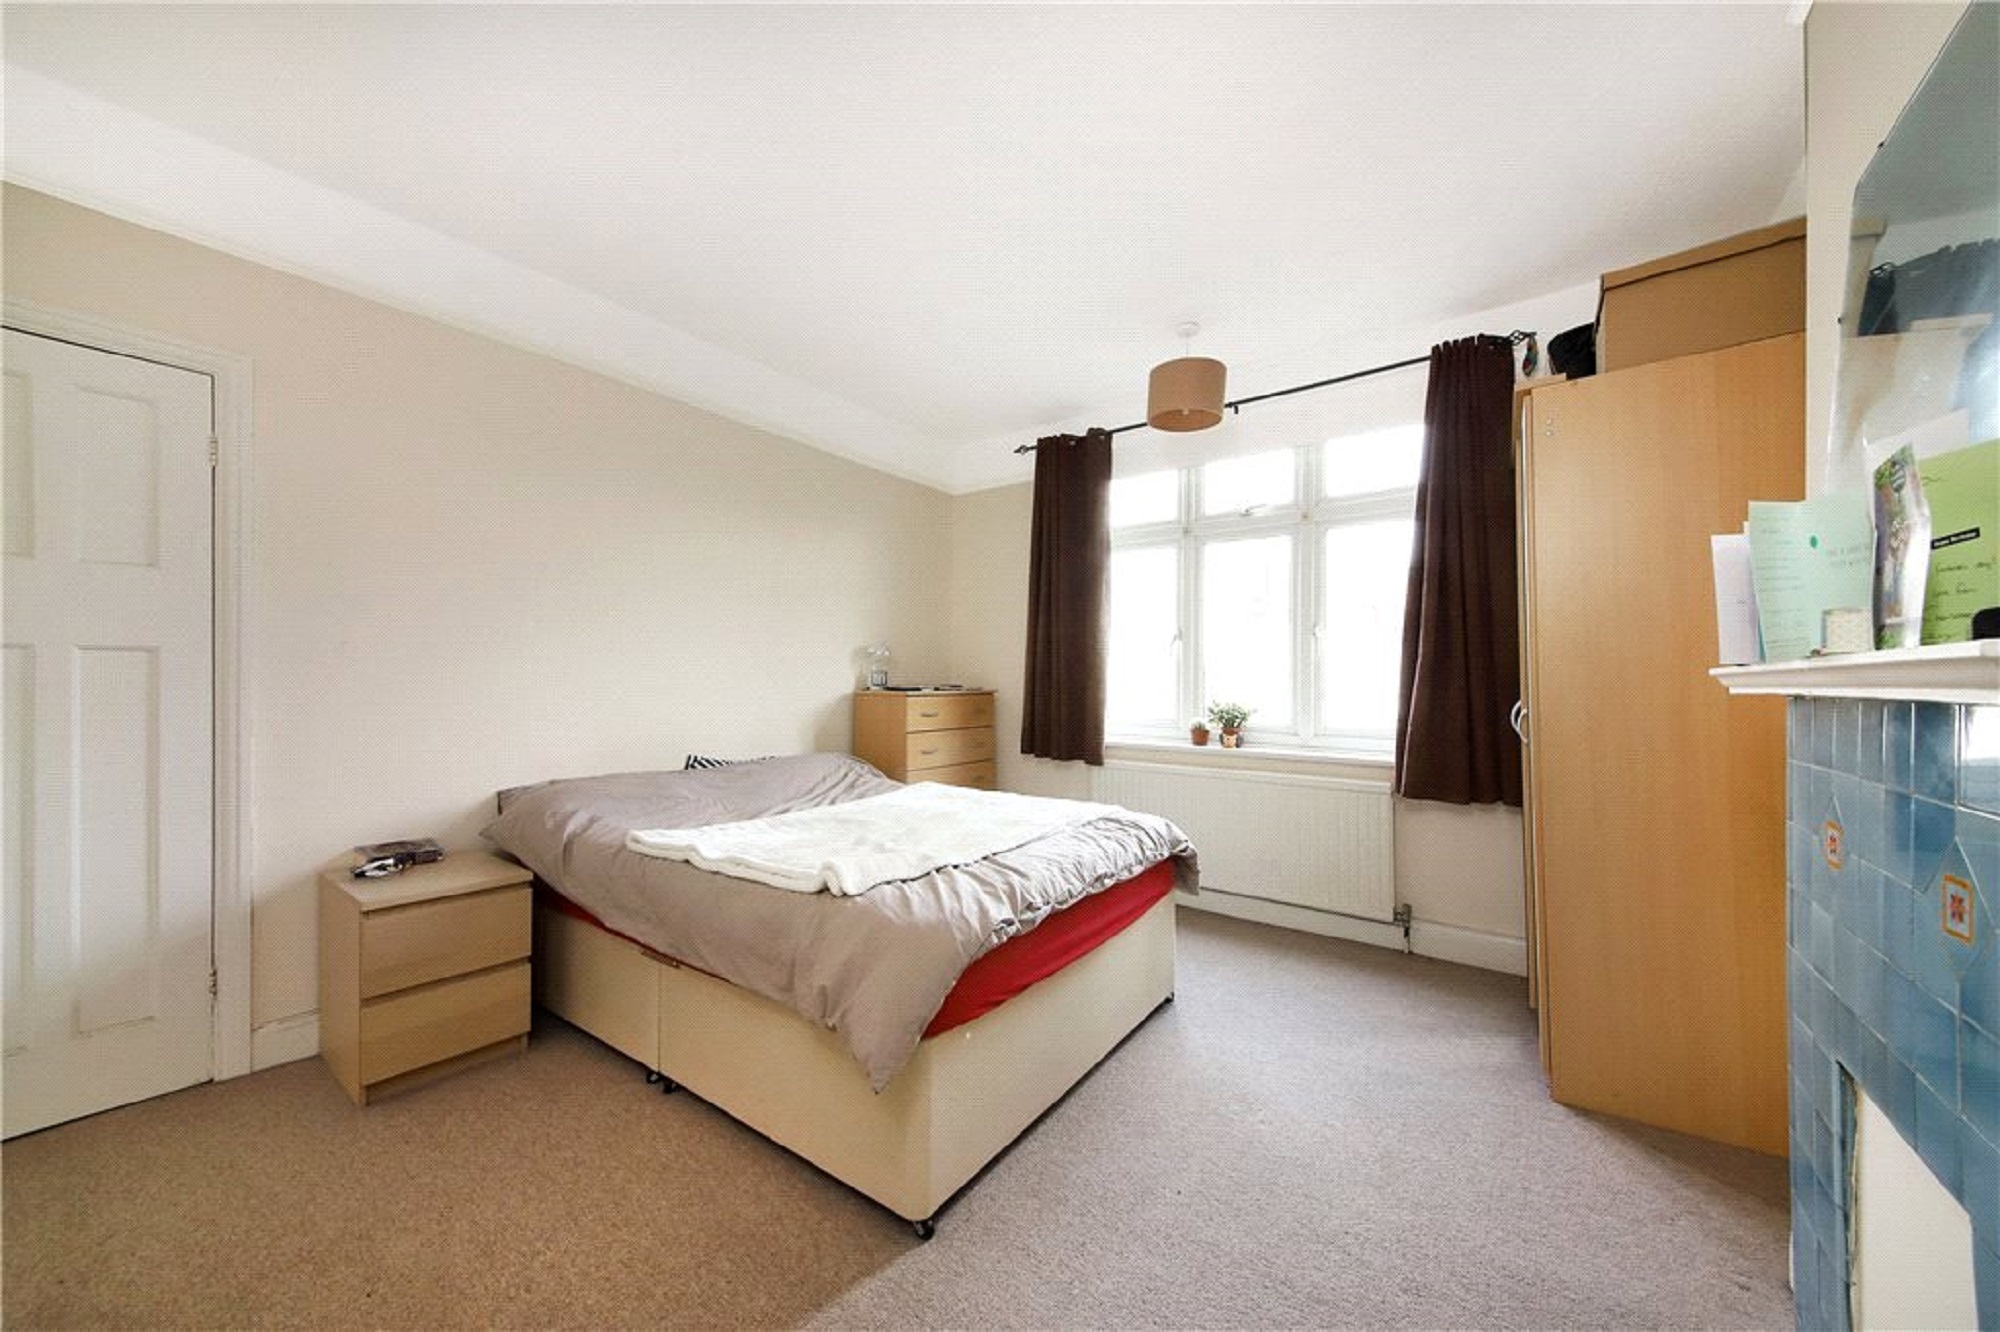 2 bedroom flat sharing in Bermondsey London, SE1 image